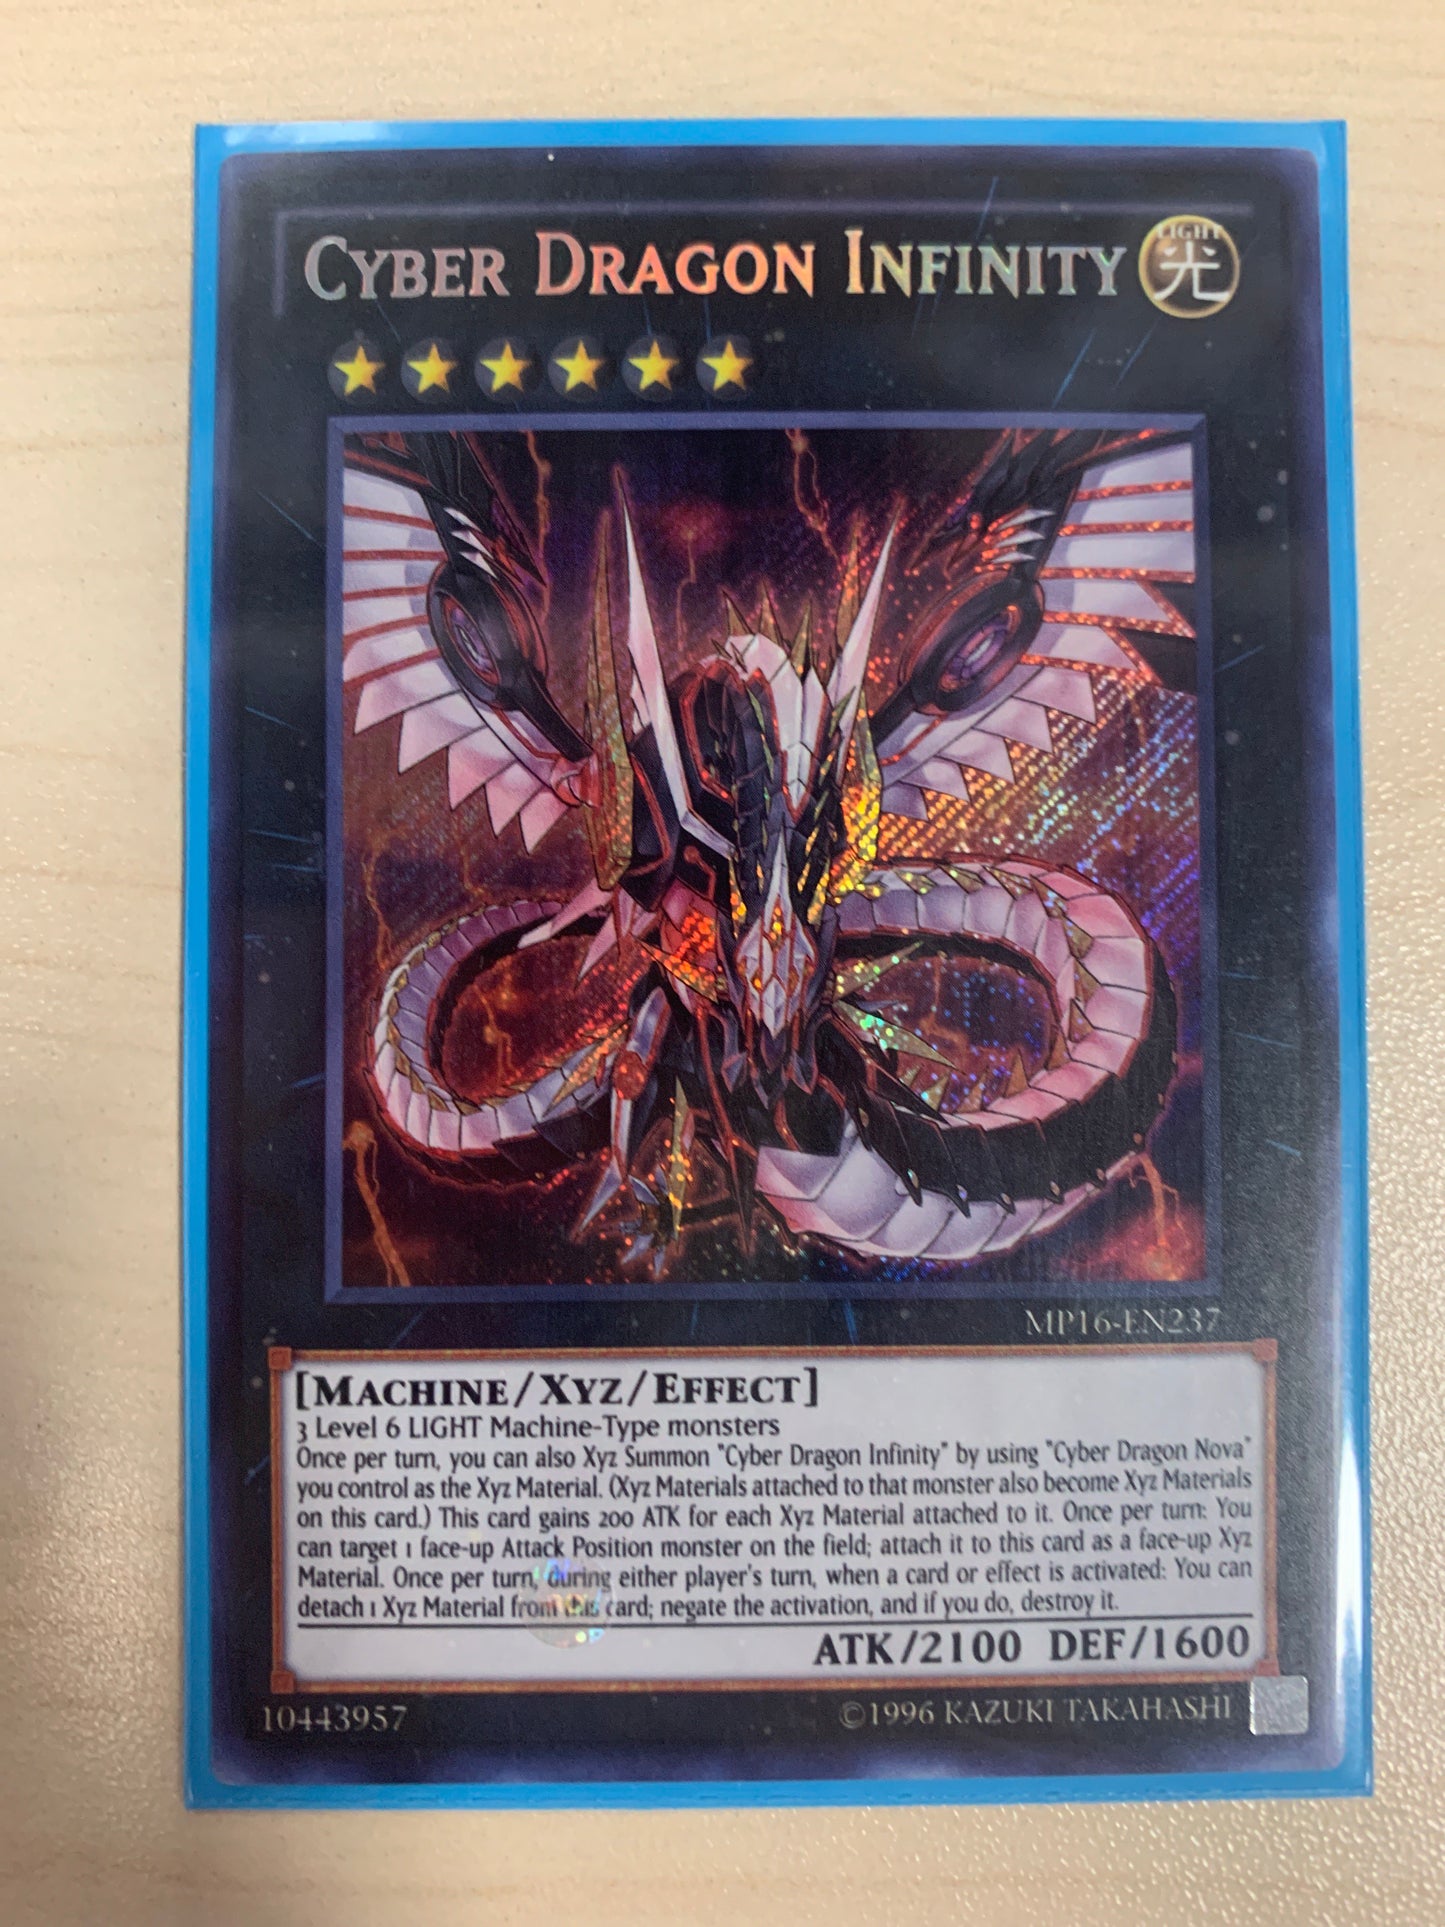 Cyber Dragon Infinity Secret Unlimited